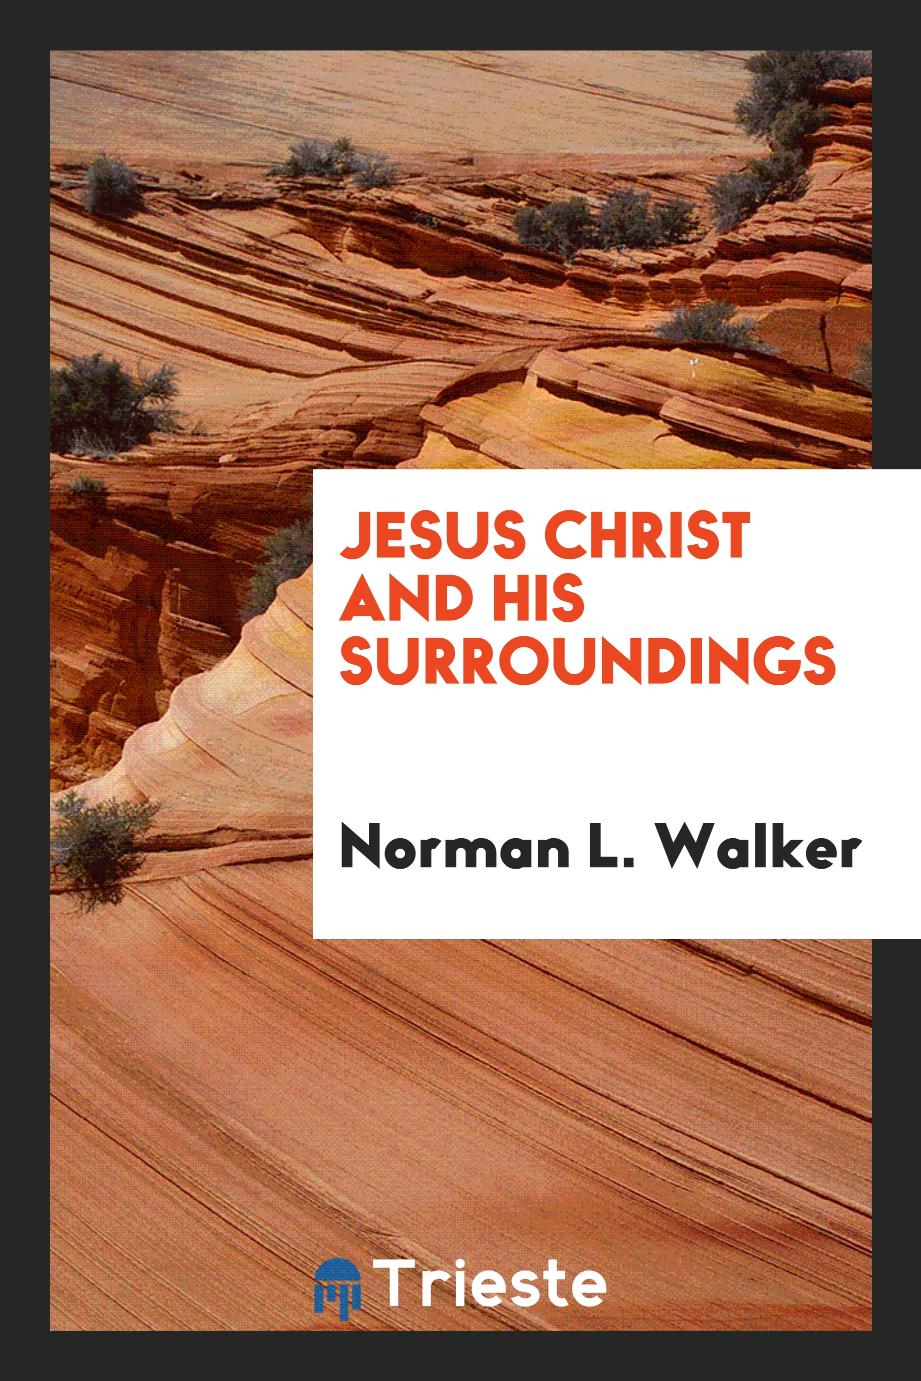 Jesus Christ and His surroundings